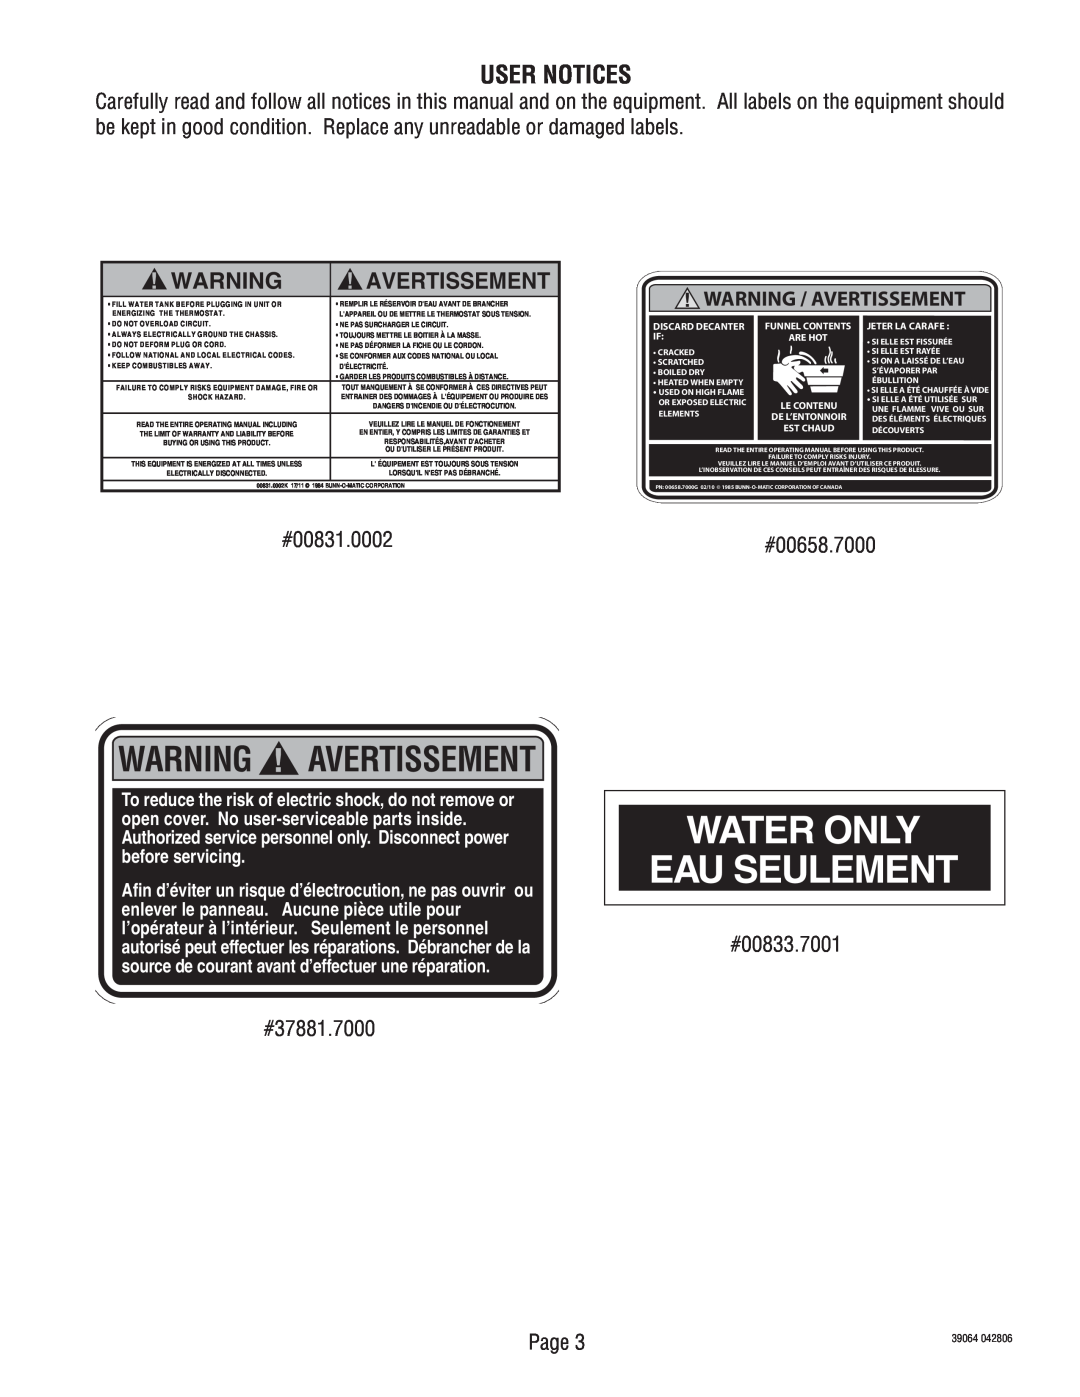 Bunn VPR APS User Notices, Water Only Eau Seulement, Warning Avertissement, Warning / Avertissement, Jeter La Carafe 